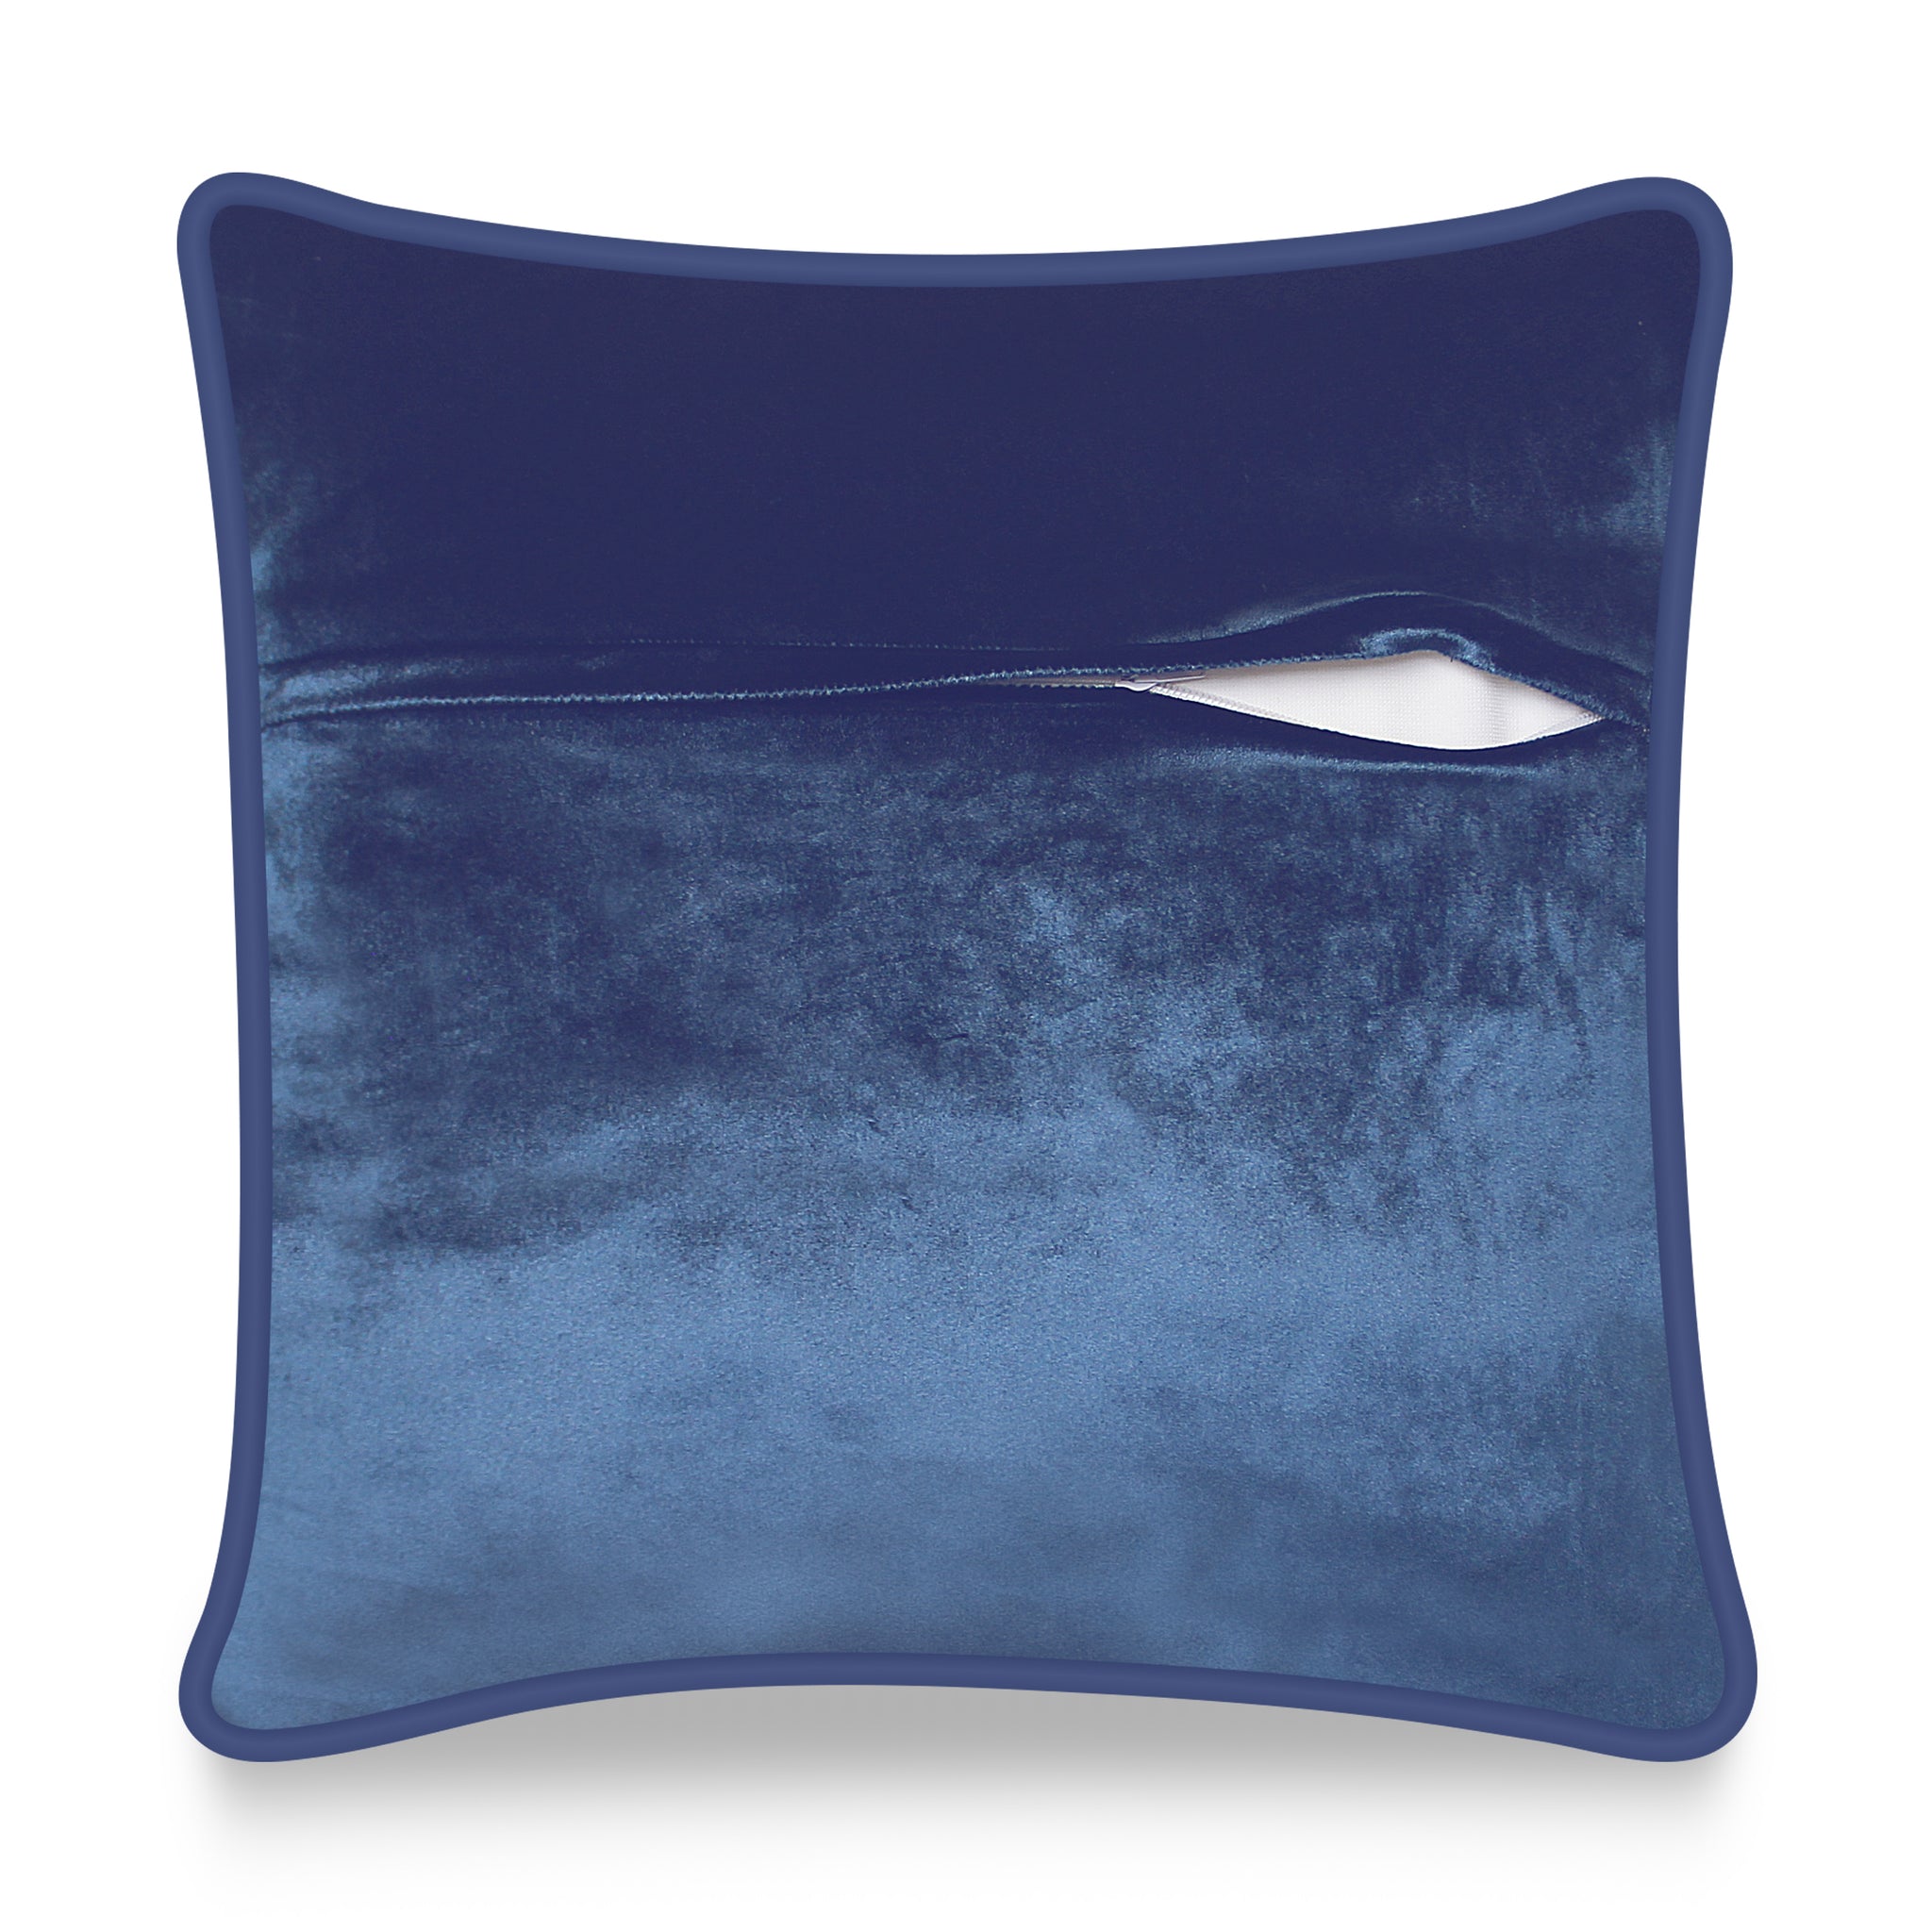  Velvet Cushion Cover Leopard in Jungle Decorative Pillowcase Modern Home Decor Throw Pillow for Sofa Chair 45x45 cm 